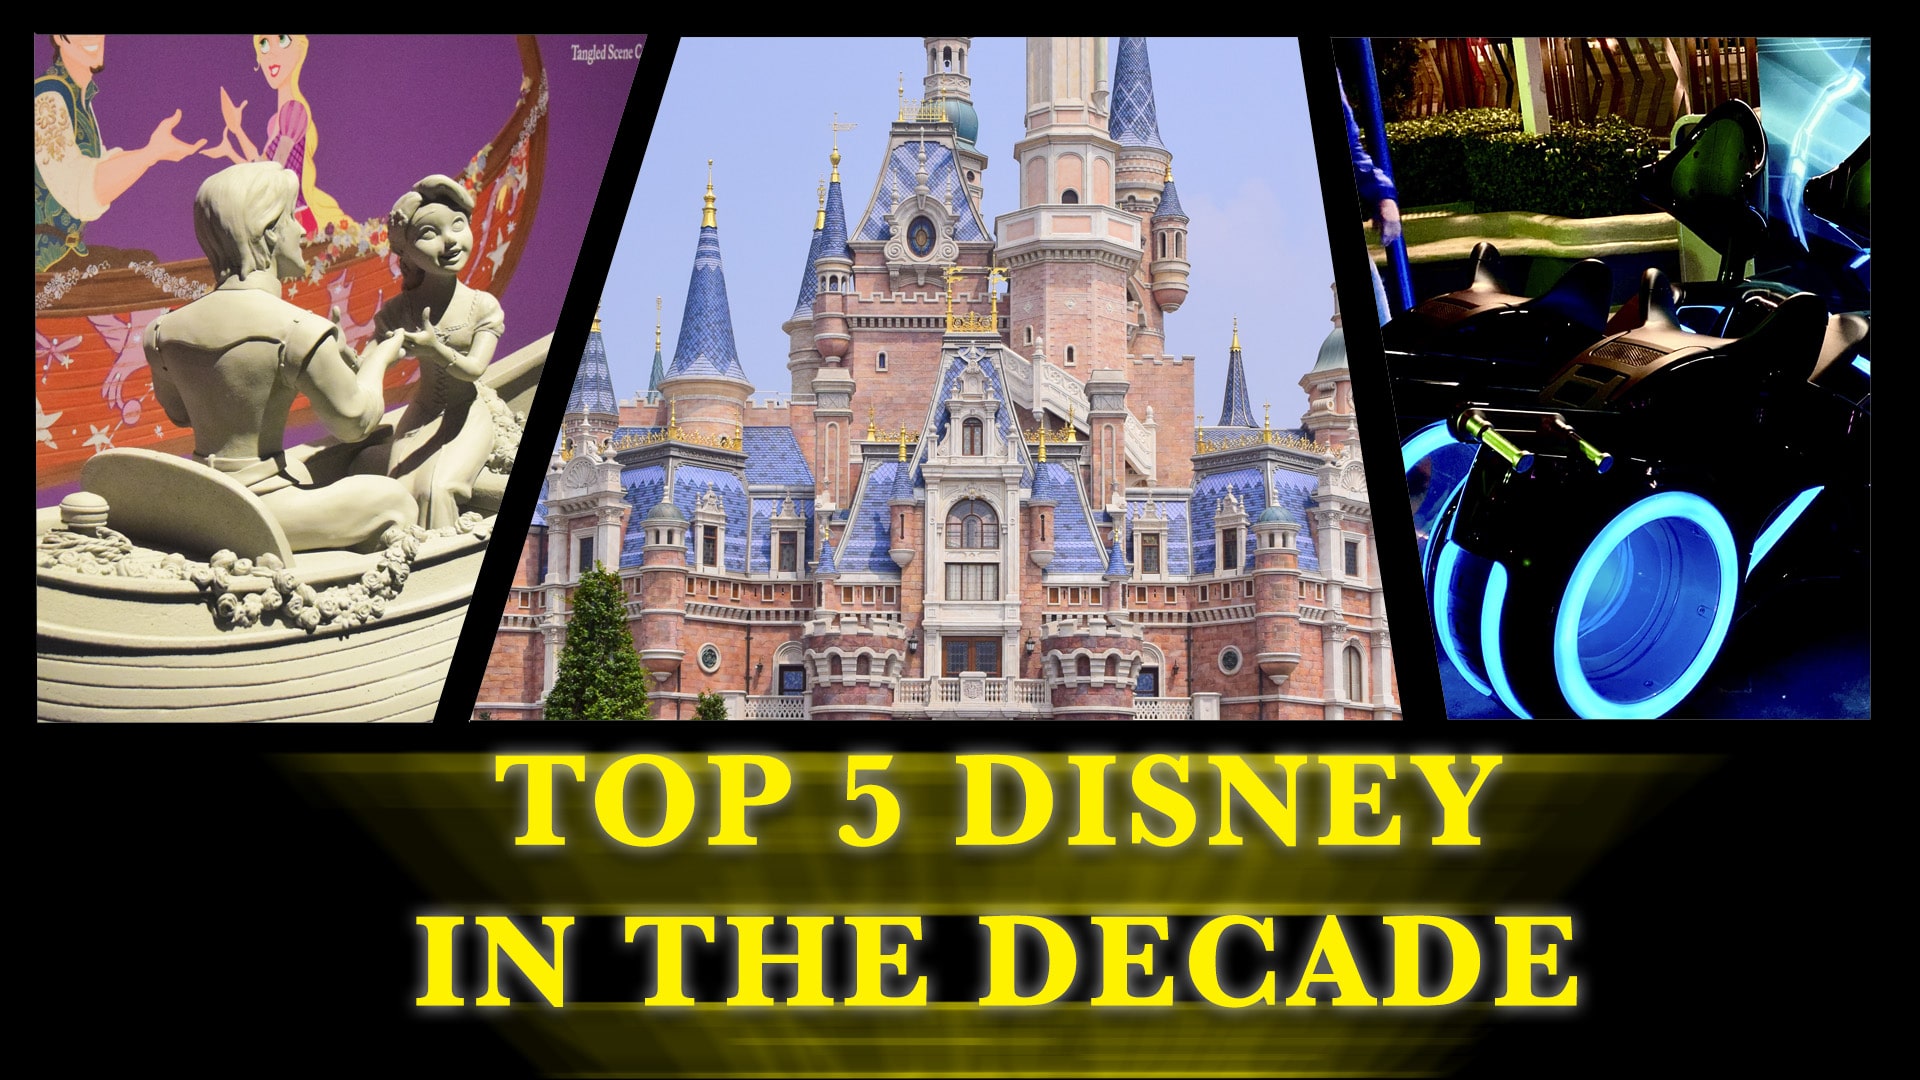 #5: Shanghai Disneyland – Top 5 Disney Stories of the Decade